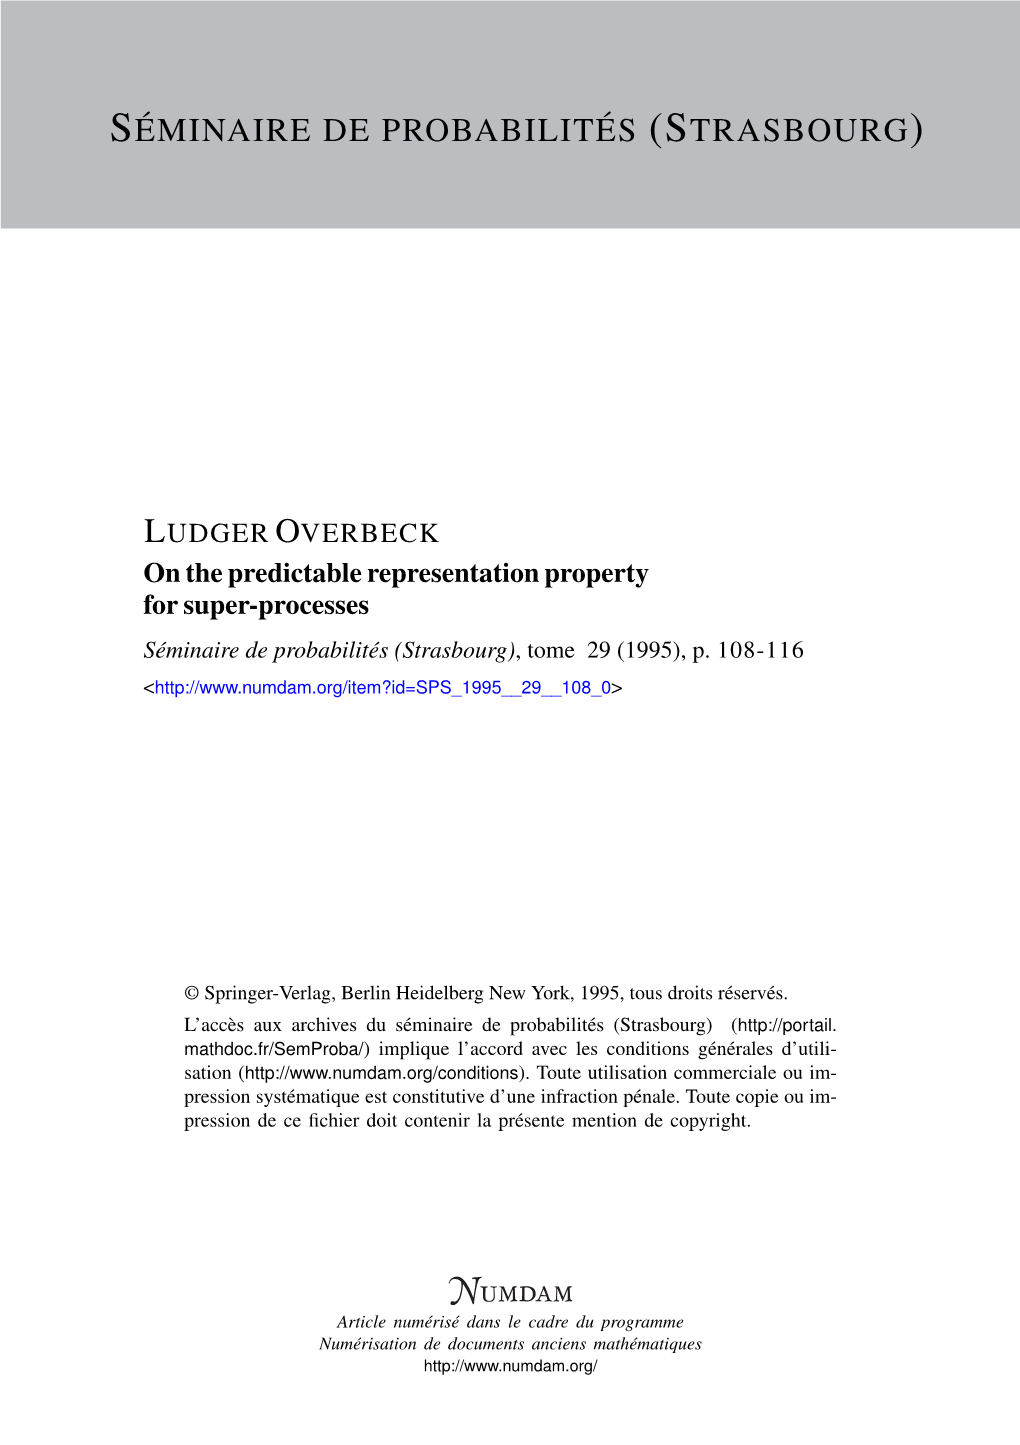 On the Predictable Representation Property for Super-Processes Séminaire De Probabilités (Strasbourg), Tome 29 (1995), P